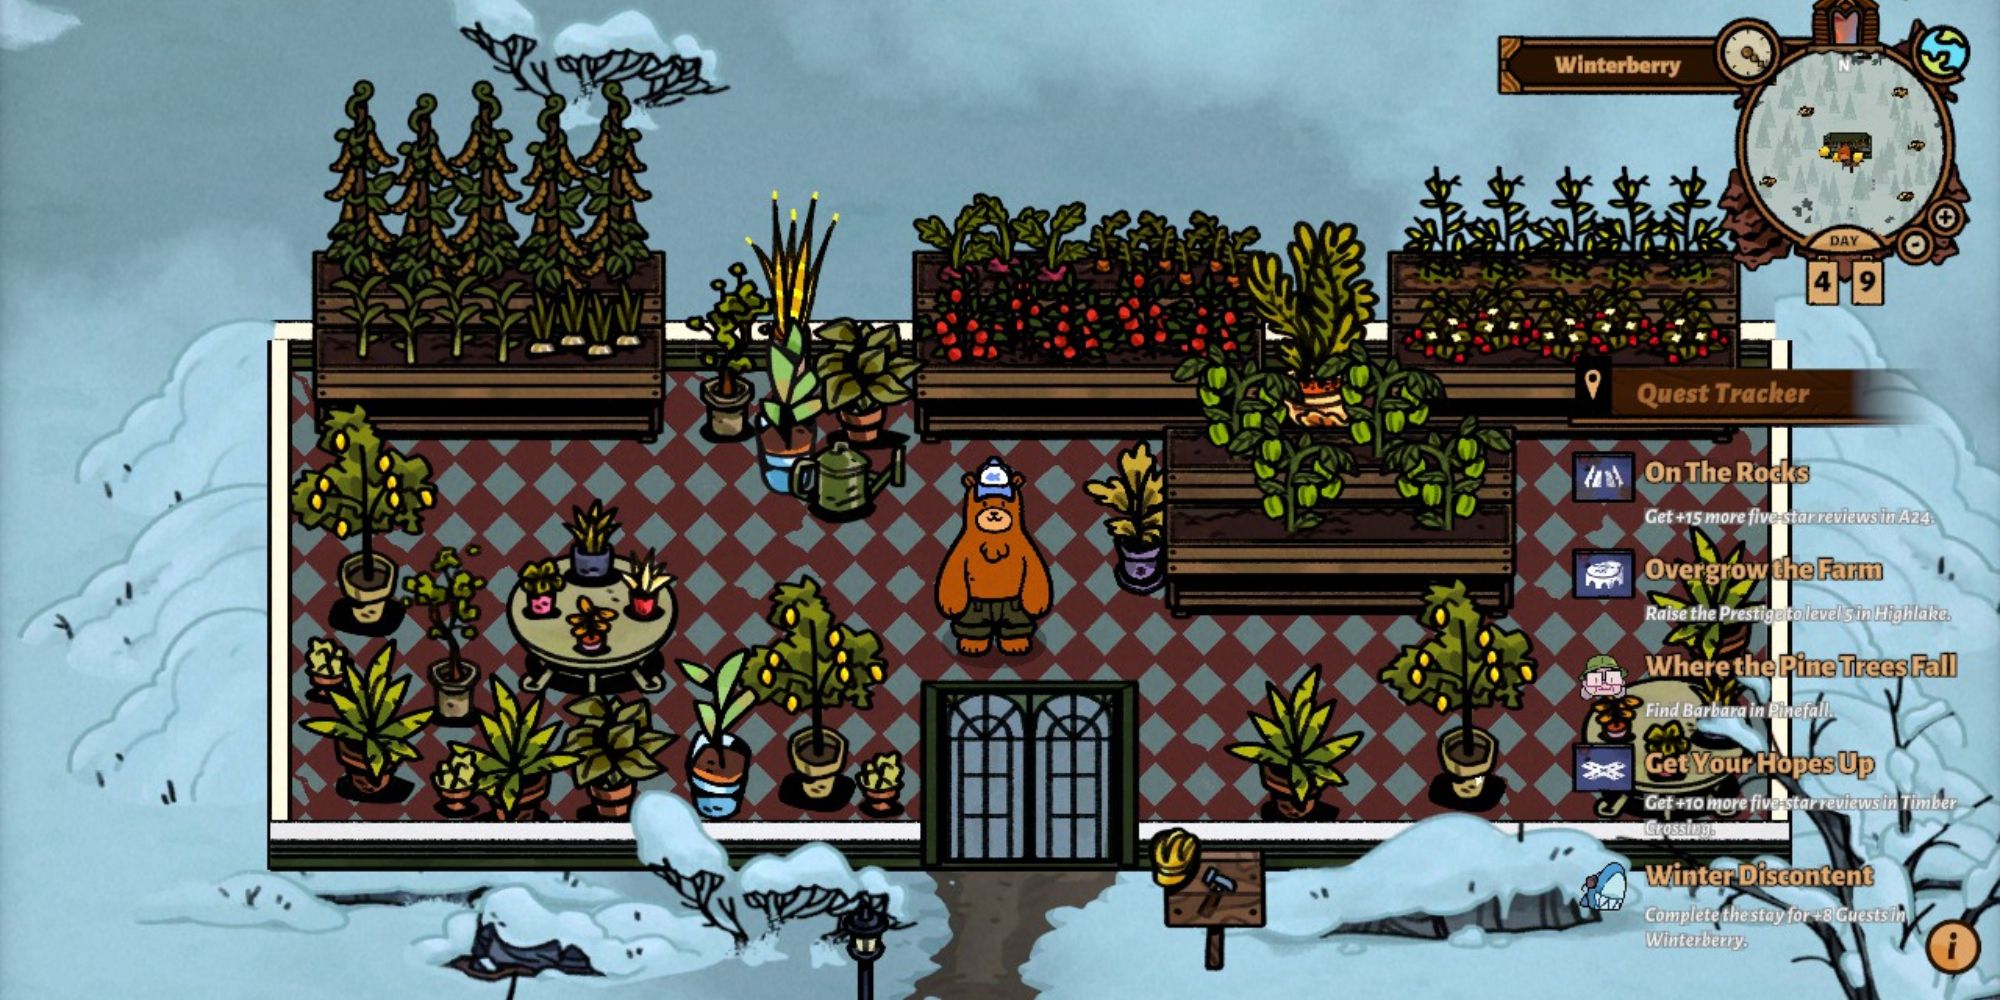 Bear and Breakfast greenhouse in winterberry